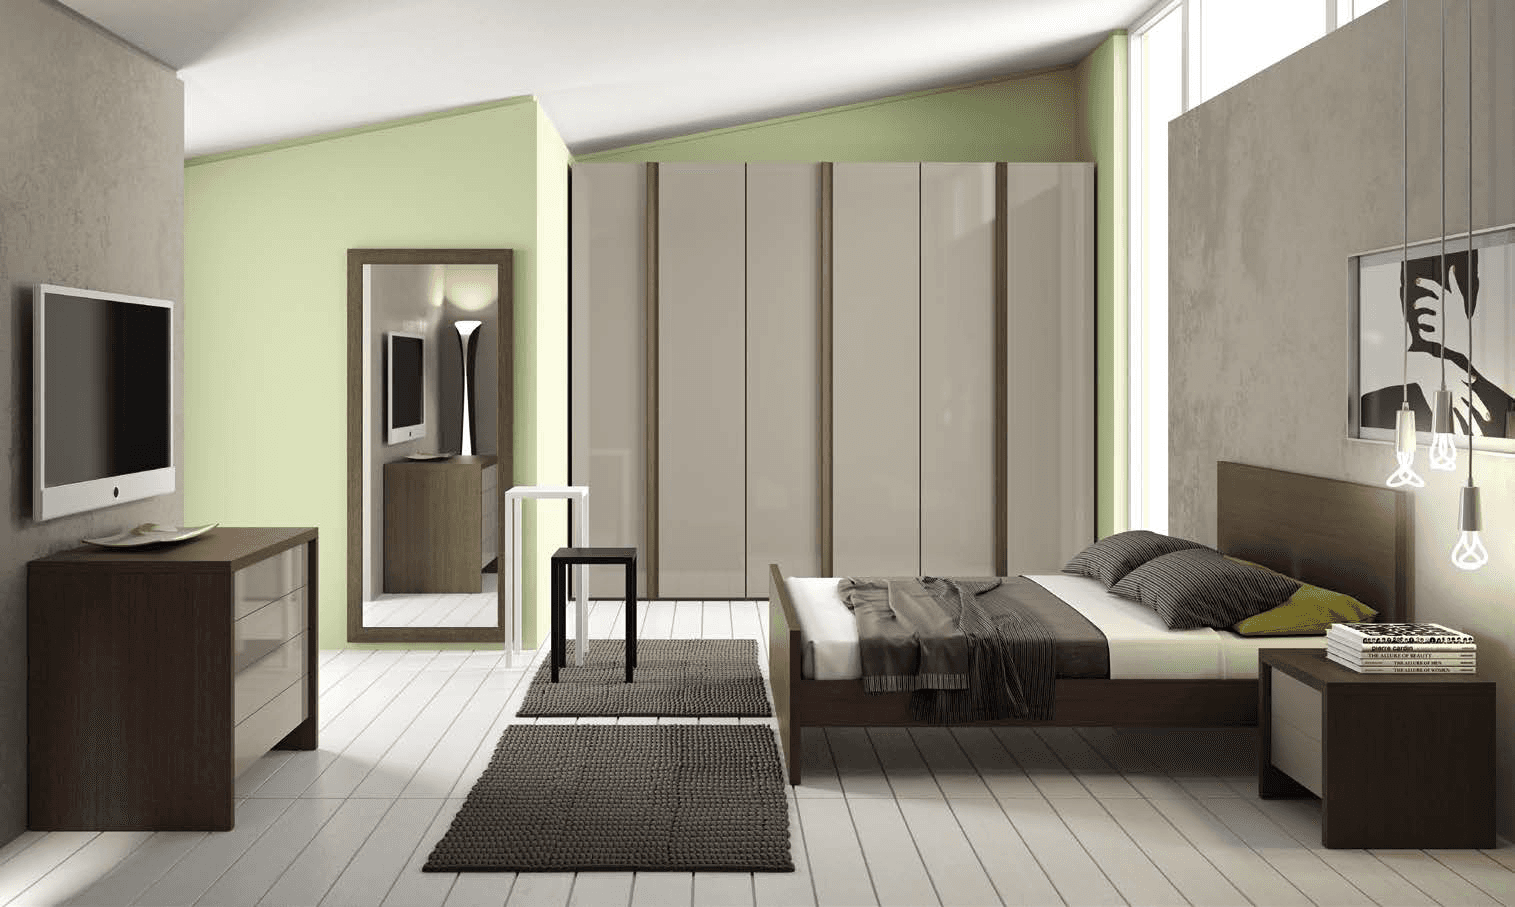 bespoke bedroom furniture and built in wardrobe